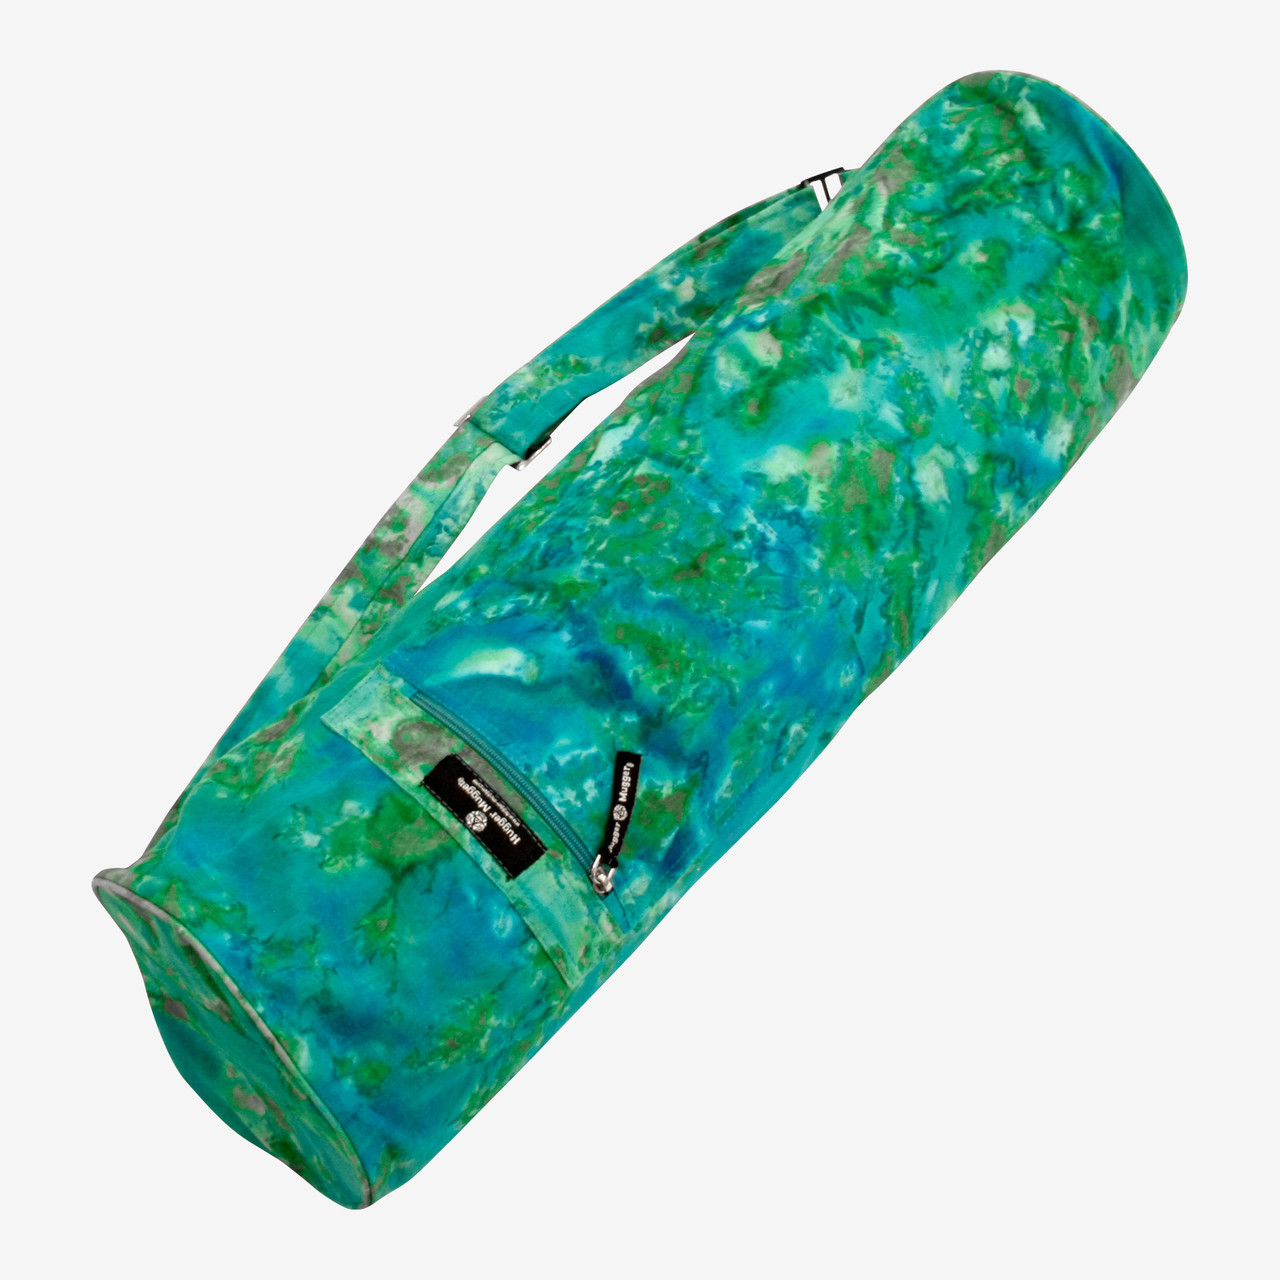 Buy Handmade Yoga Mat Cover Bag Online